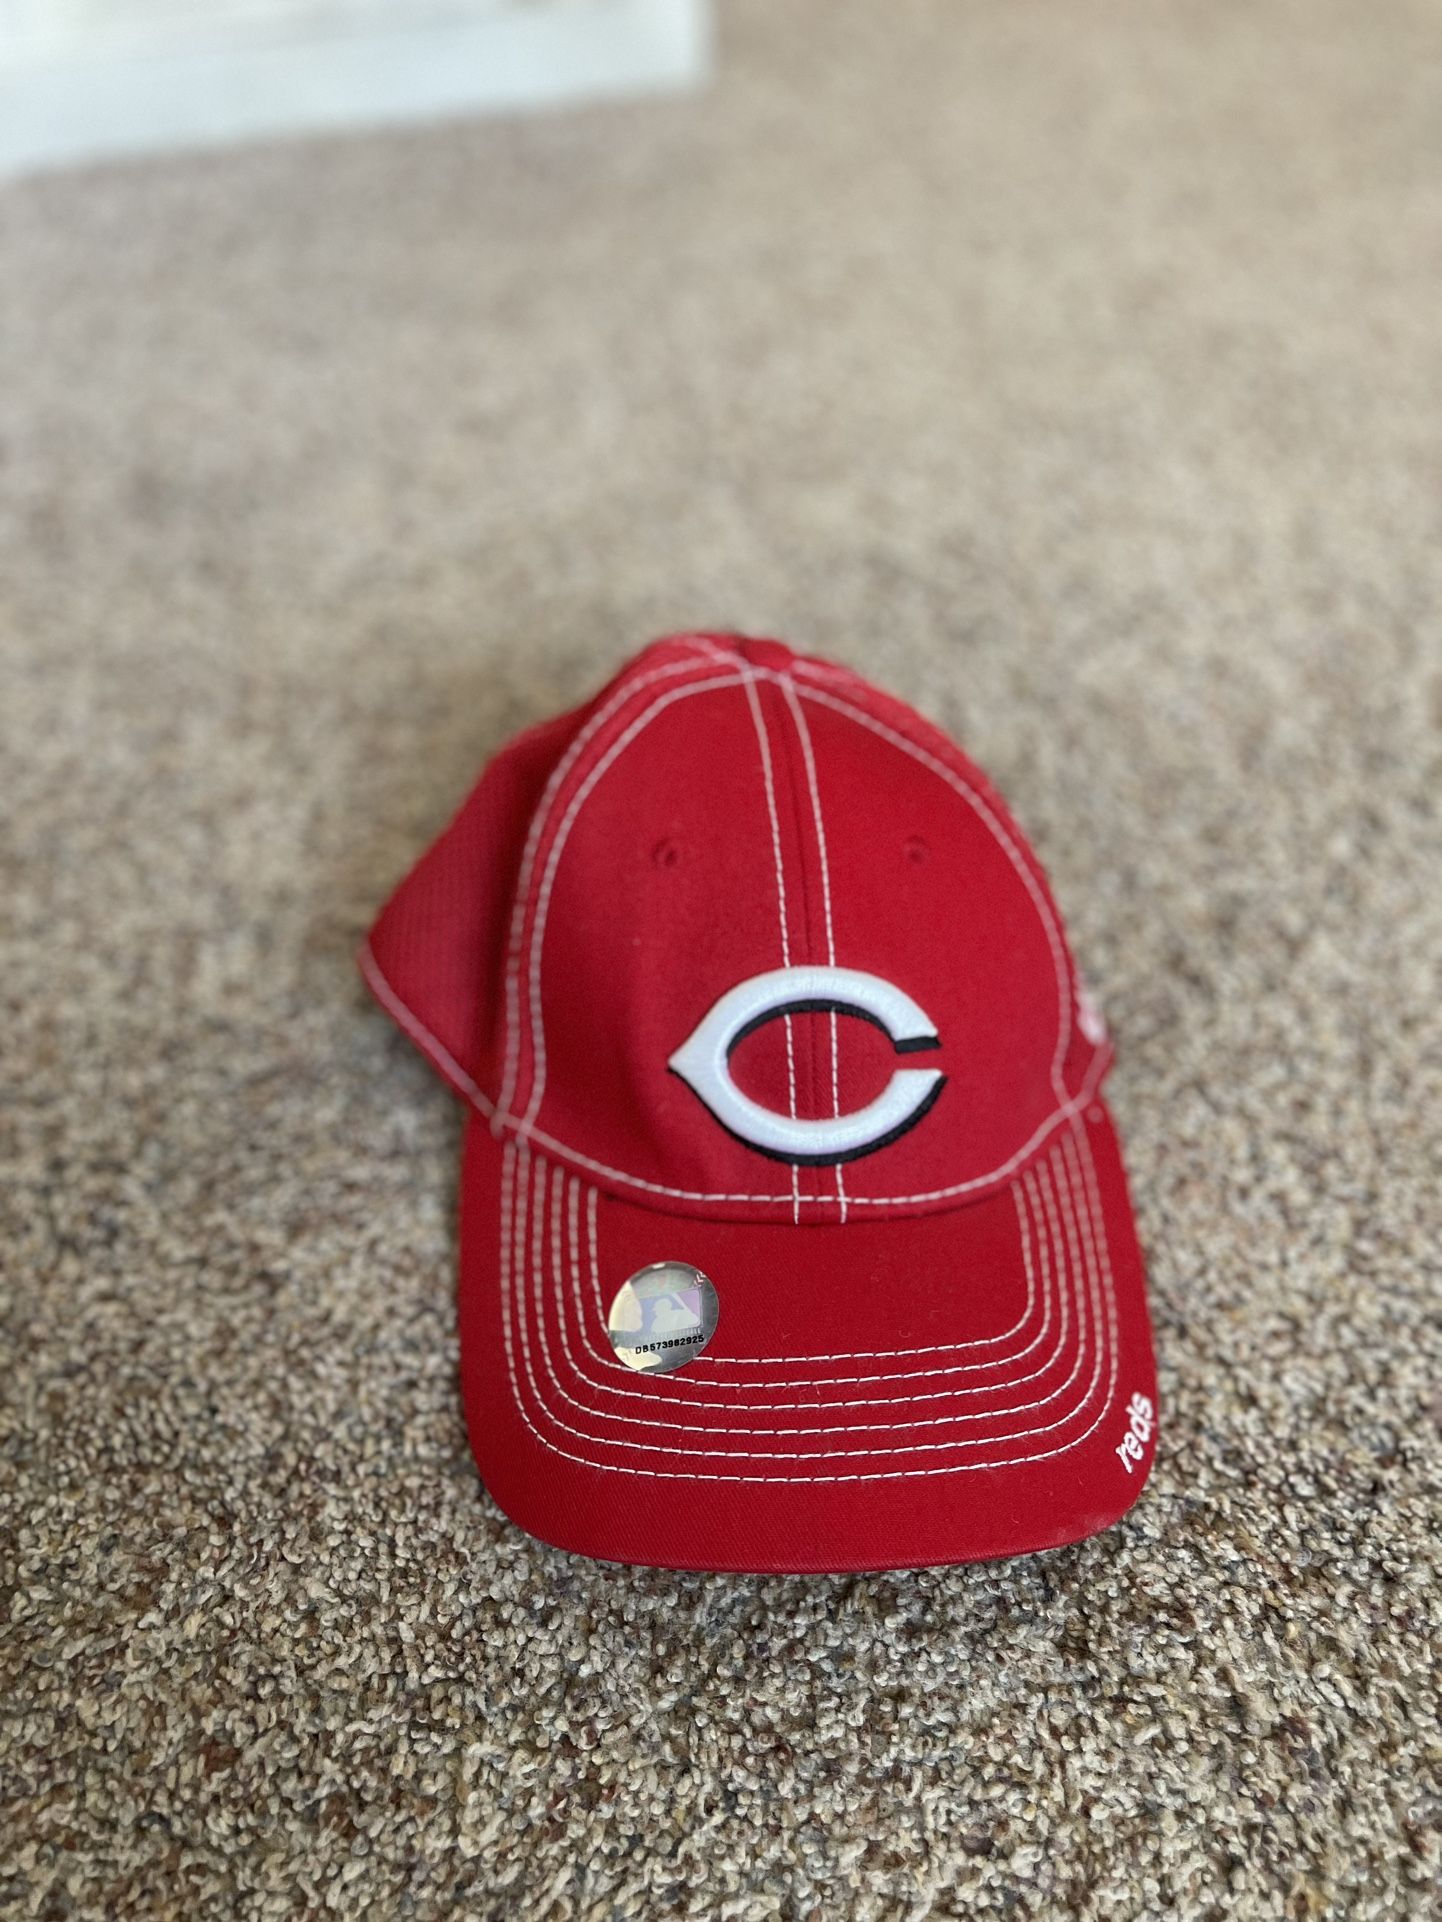 Cincinnati Reds hat